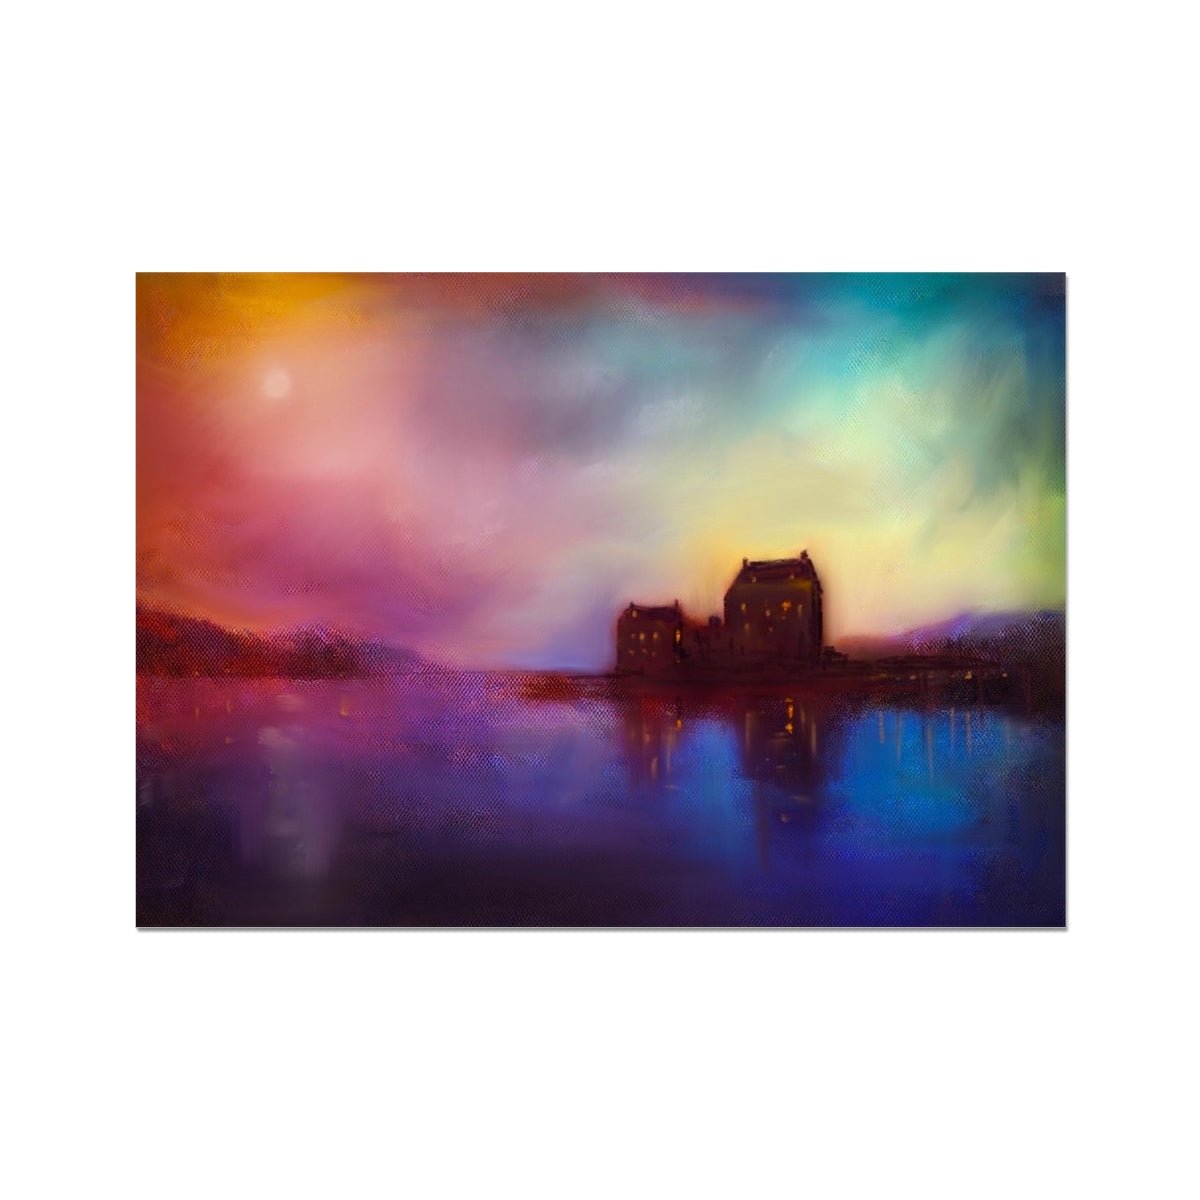 Eilean Donan Castle Sunset Painting | Fine Art Prints From Scotland-Unframed Prints-Scottish Castles Art Gallery-A2 Landscape-Paintings, Prints, Homeware, Art Gifts From Scotland By Scottish Artist Kevin Hunter